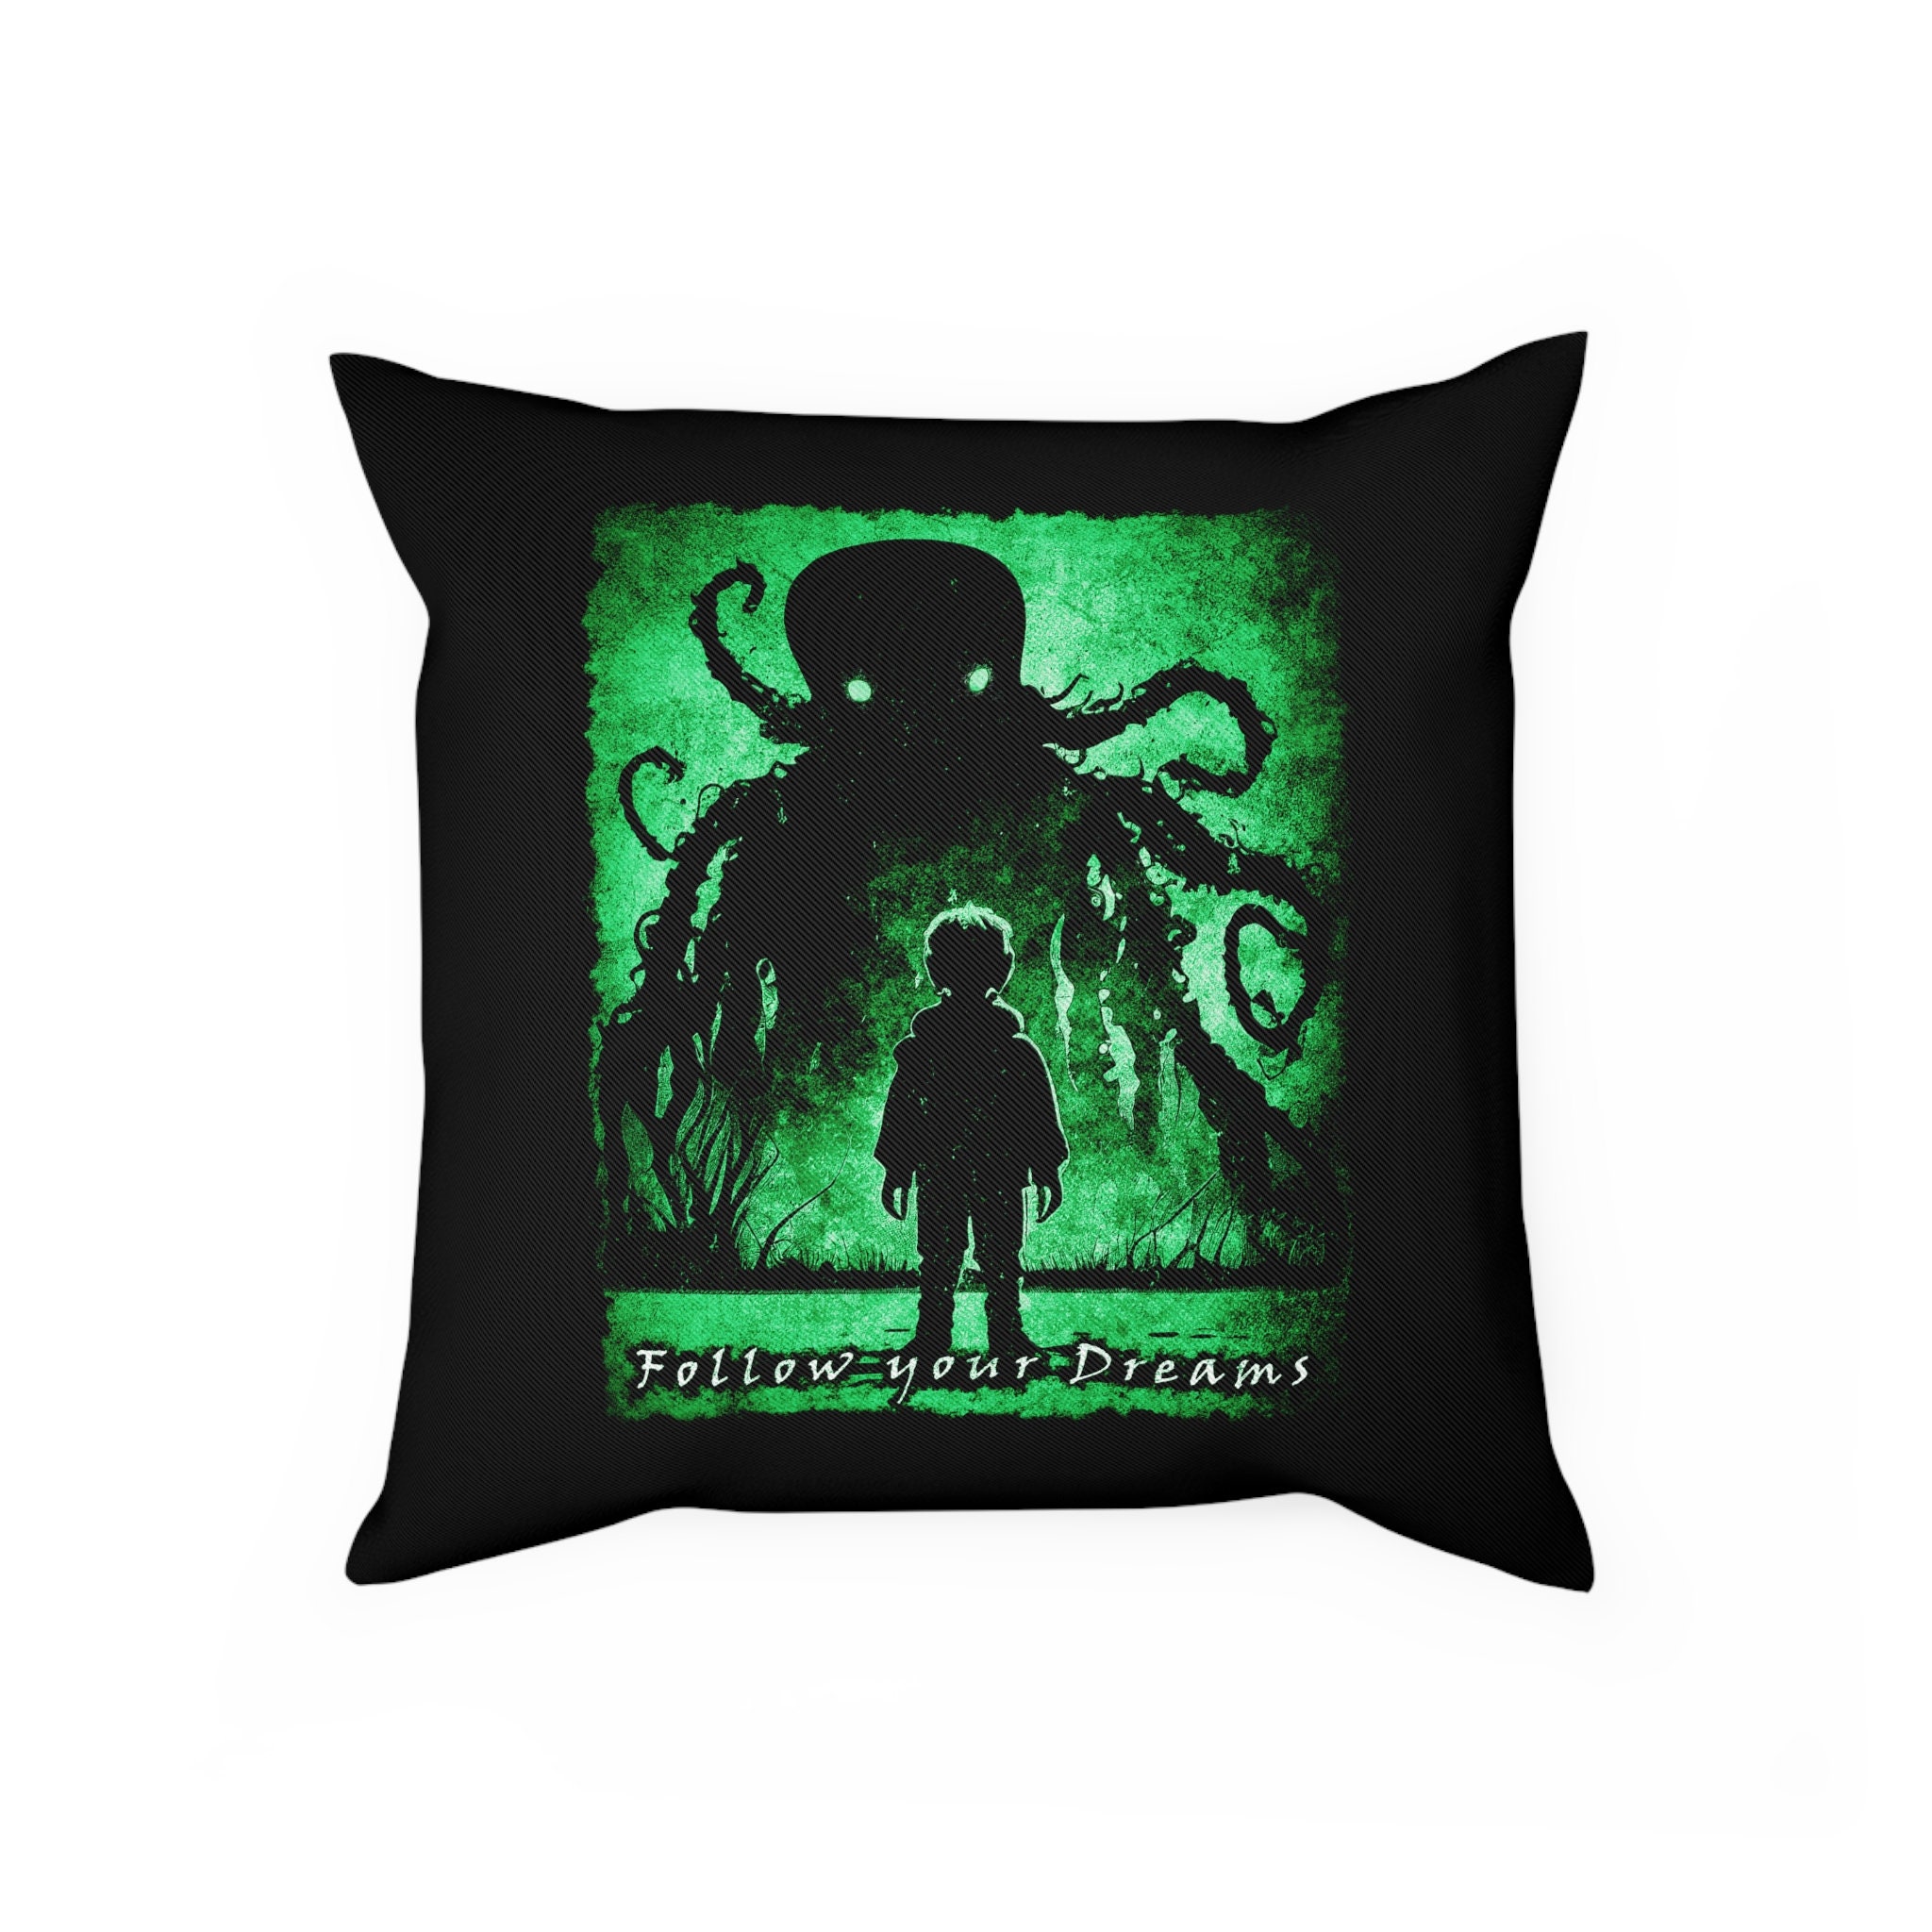 Dark Souls Pillows - Giant Dad Throw Pillow RB0909 - Dark Souls Shop